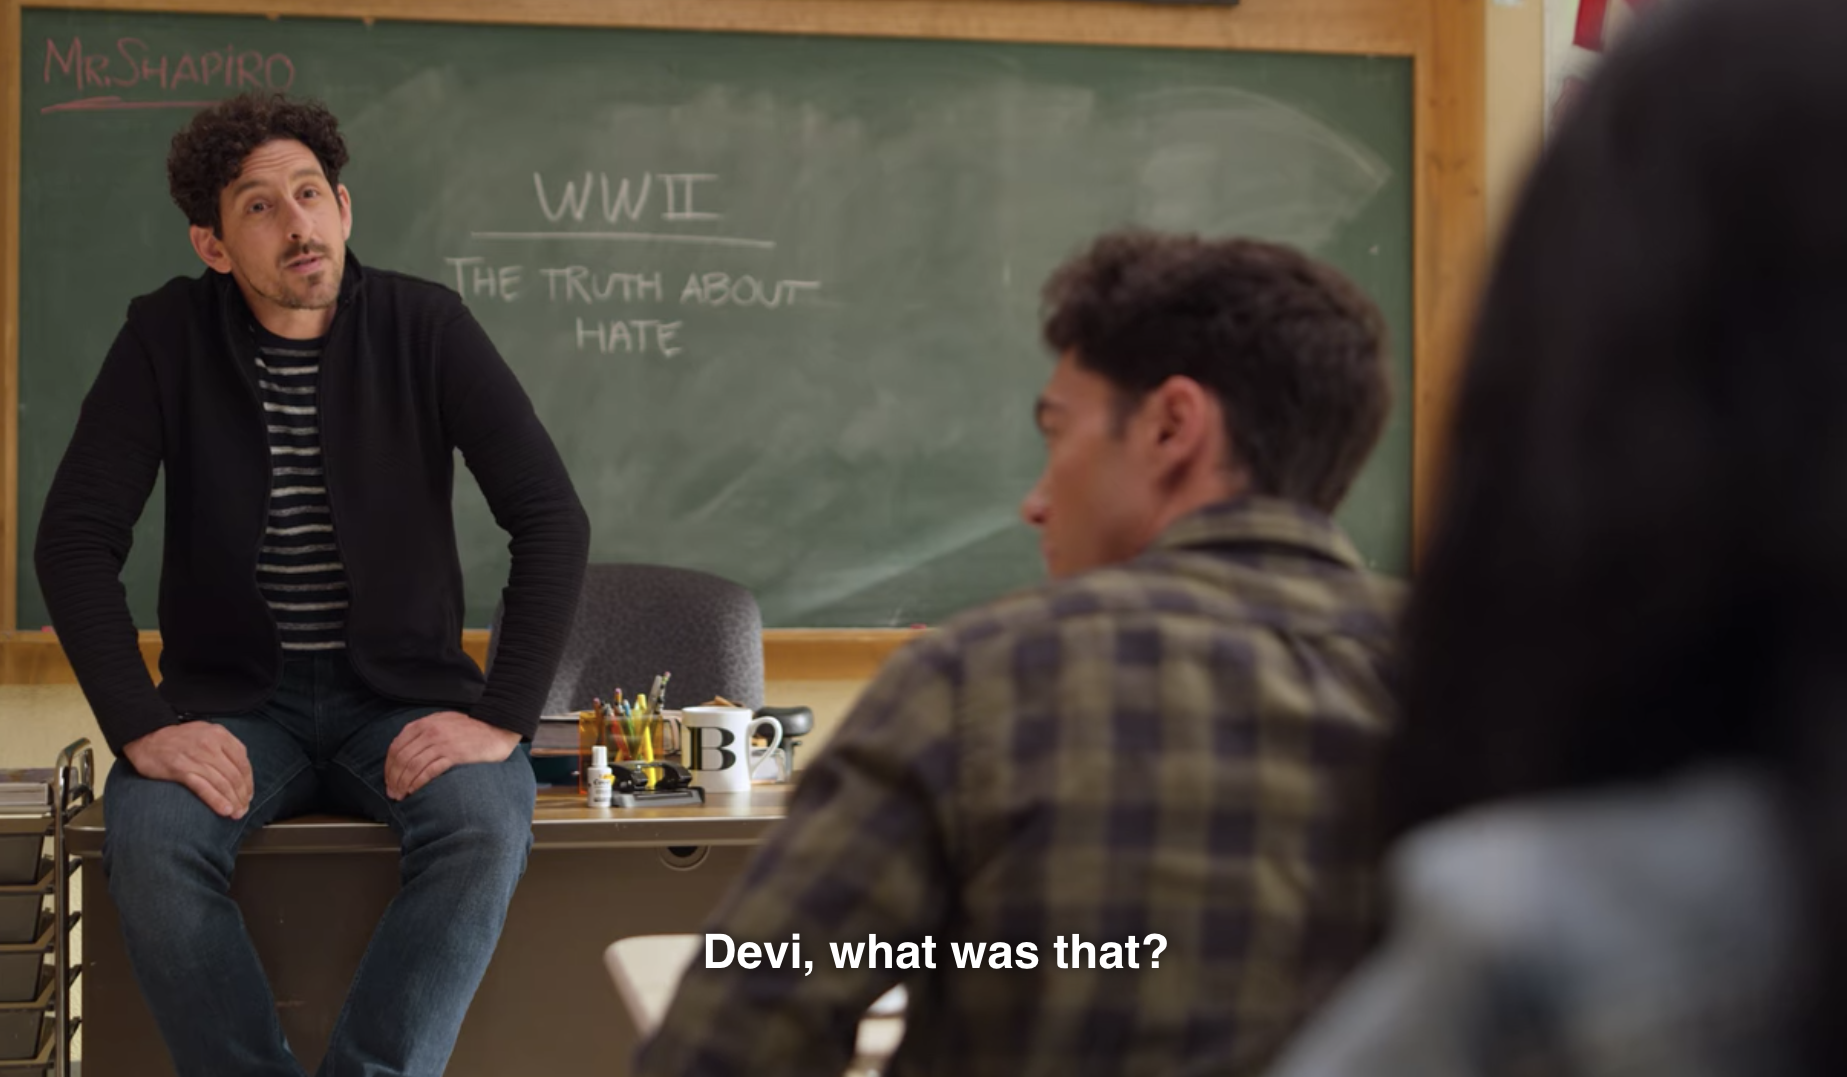 Mr. Shapiro: "Devi, what was that?"